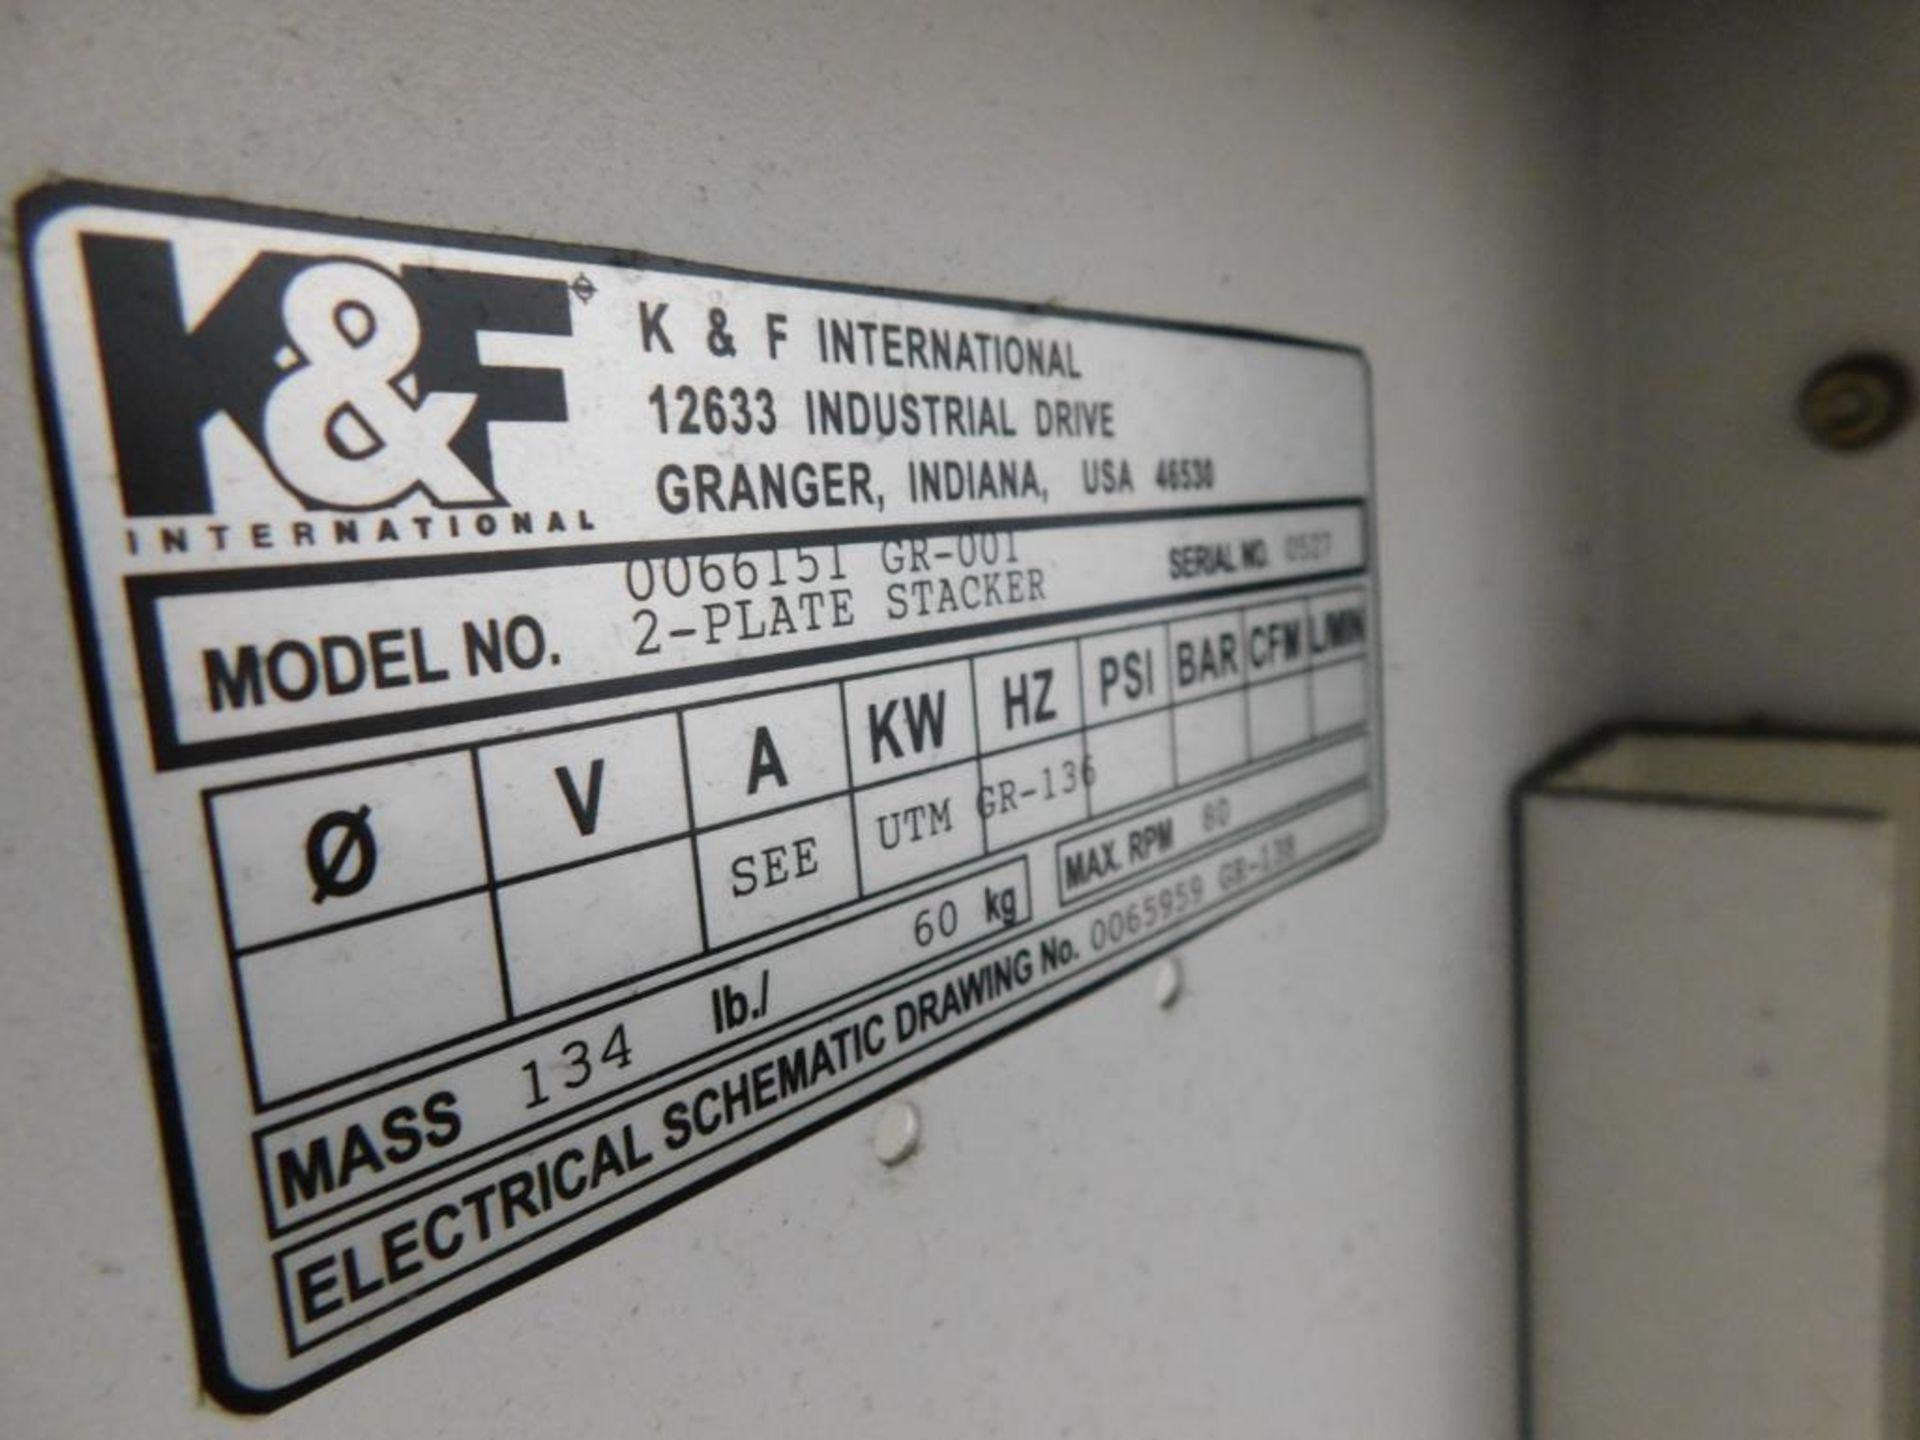 LOT: (1) K & F Model CD GR-053 Conveyor Table, S/N 0509, (3) K & F Model 0066151 GR-001 2-Plate Stac - Image 8 of 10